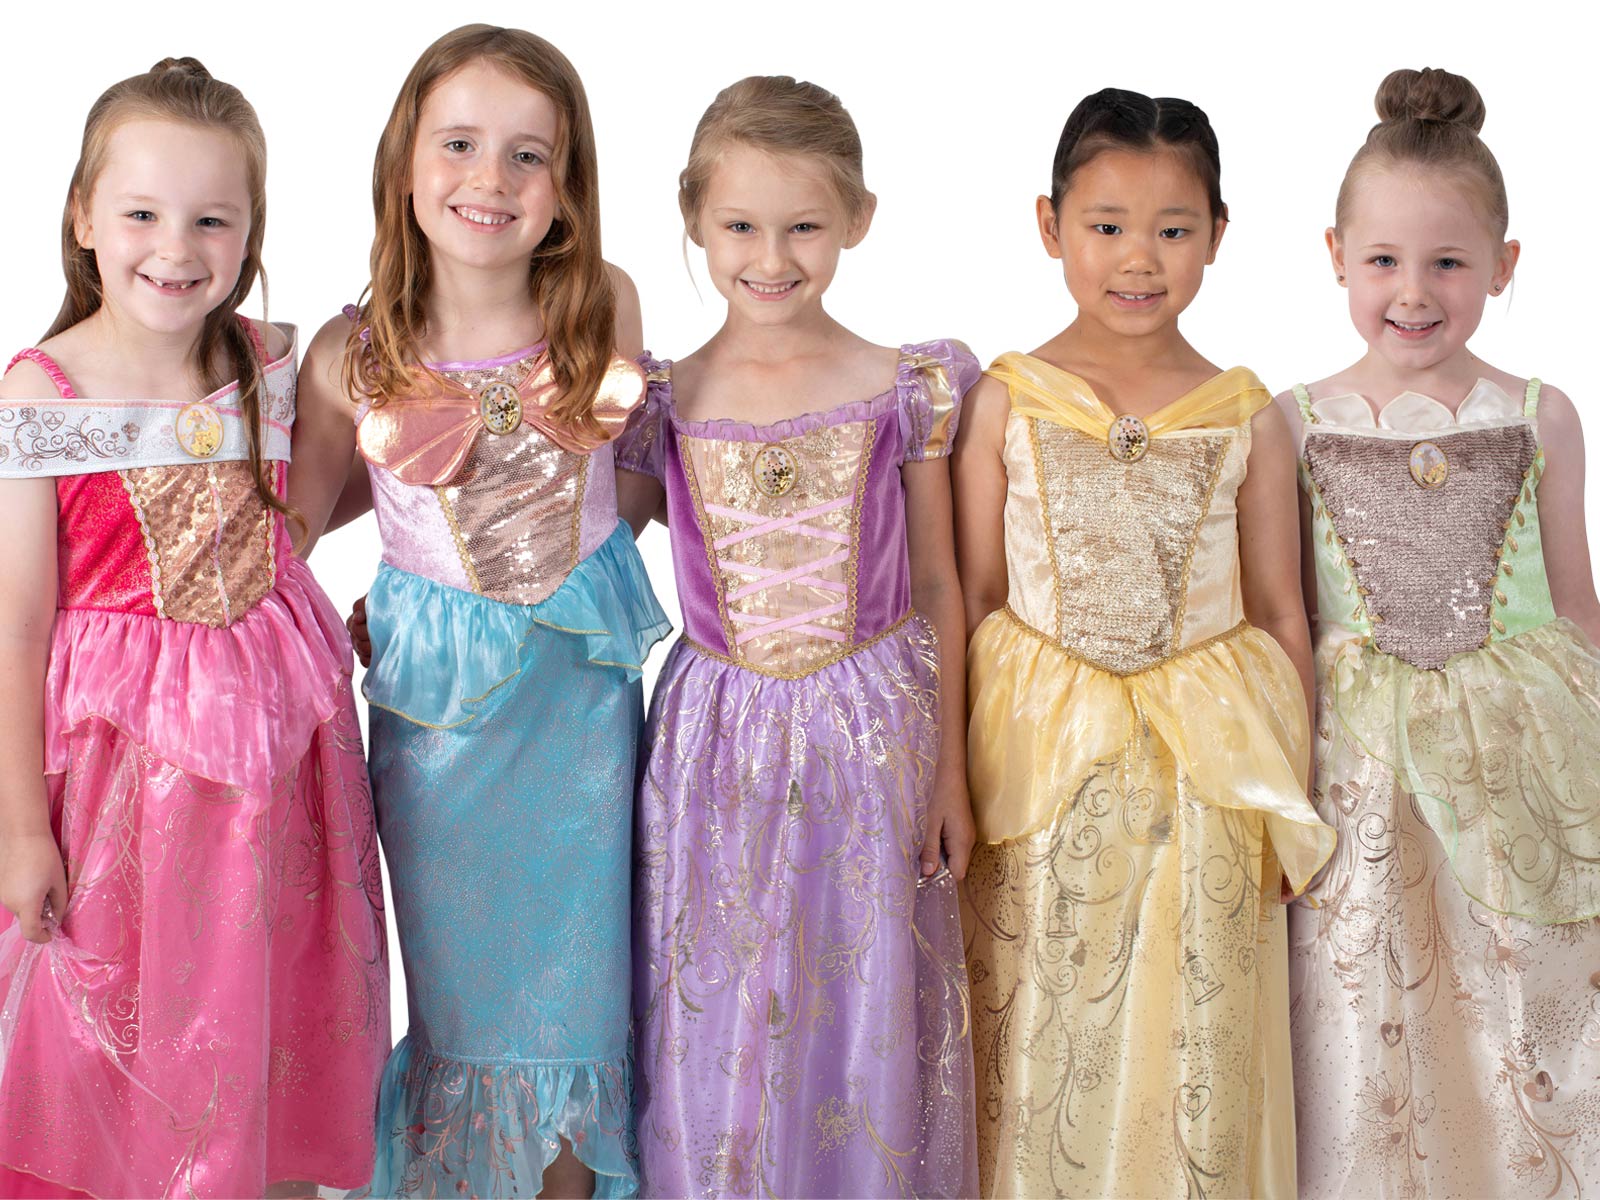 Princess Celebration Costume range for Kids